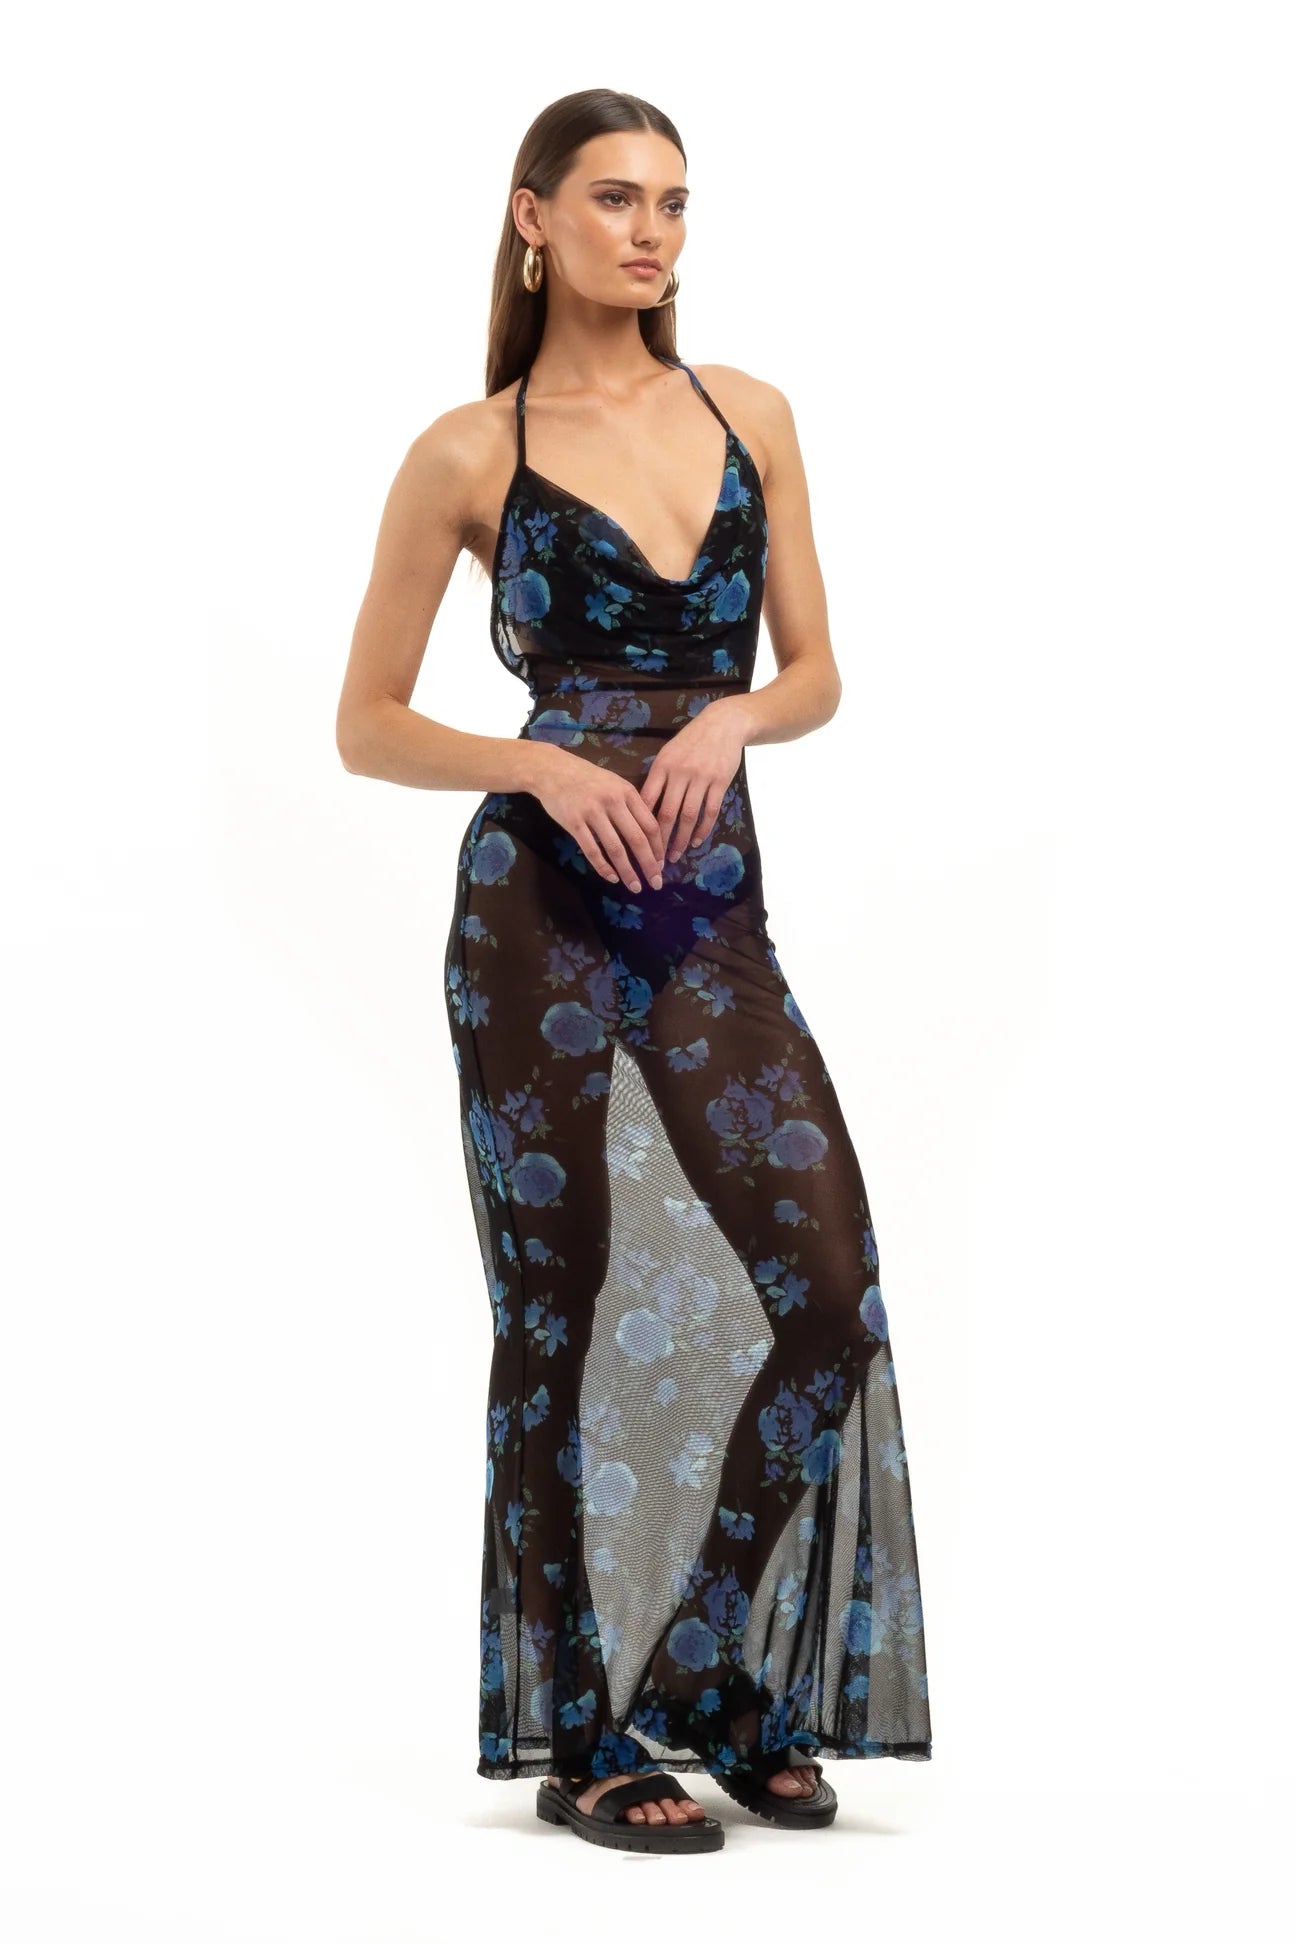 Noac Beachwear Ivana Dress // Blue Floral